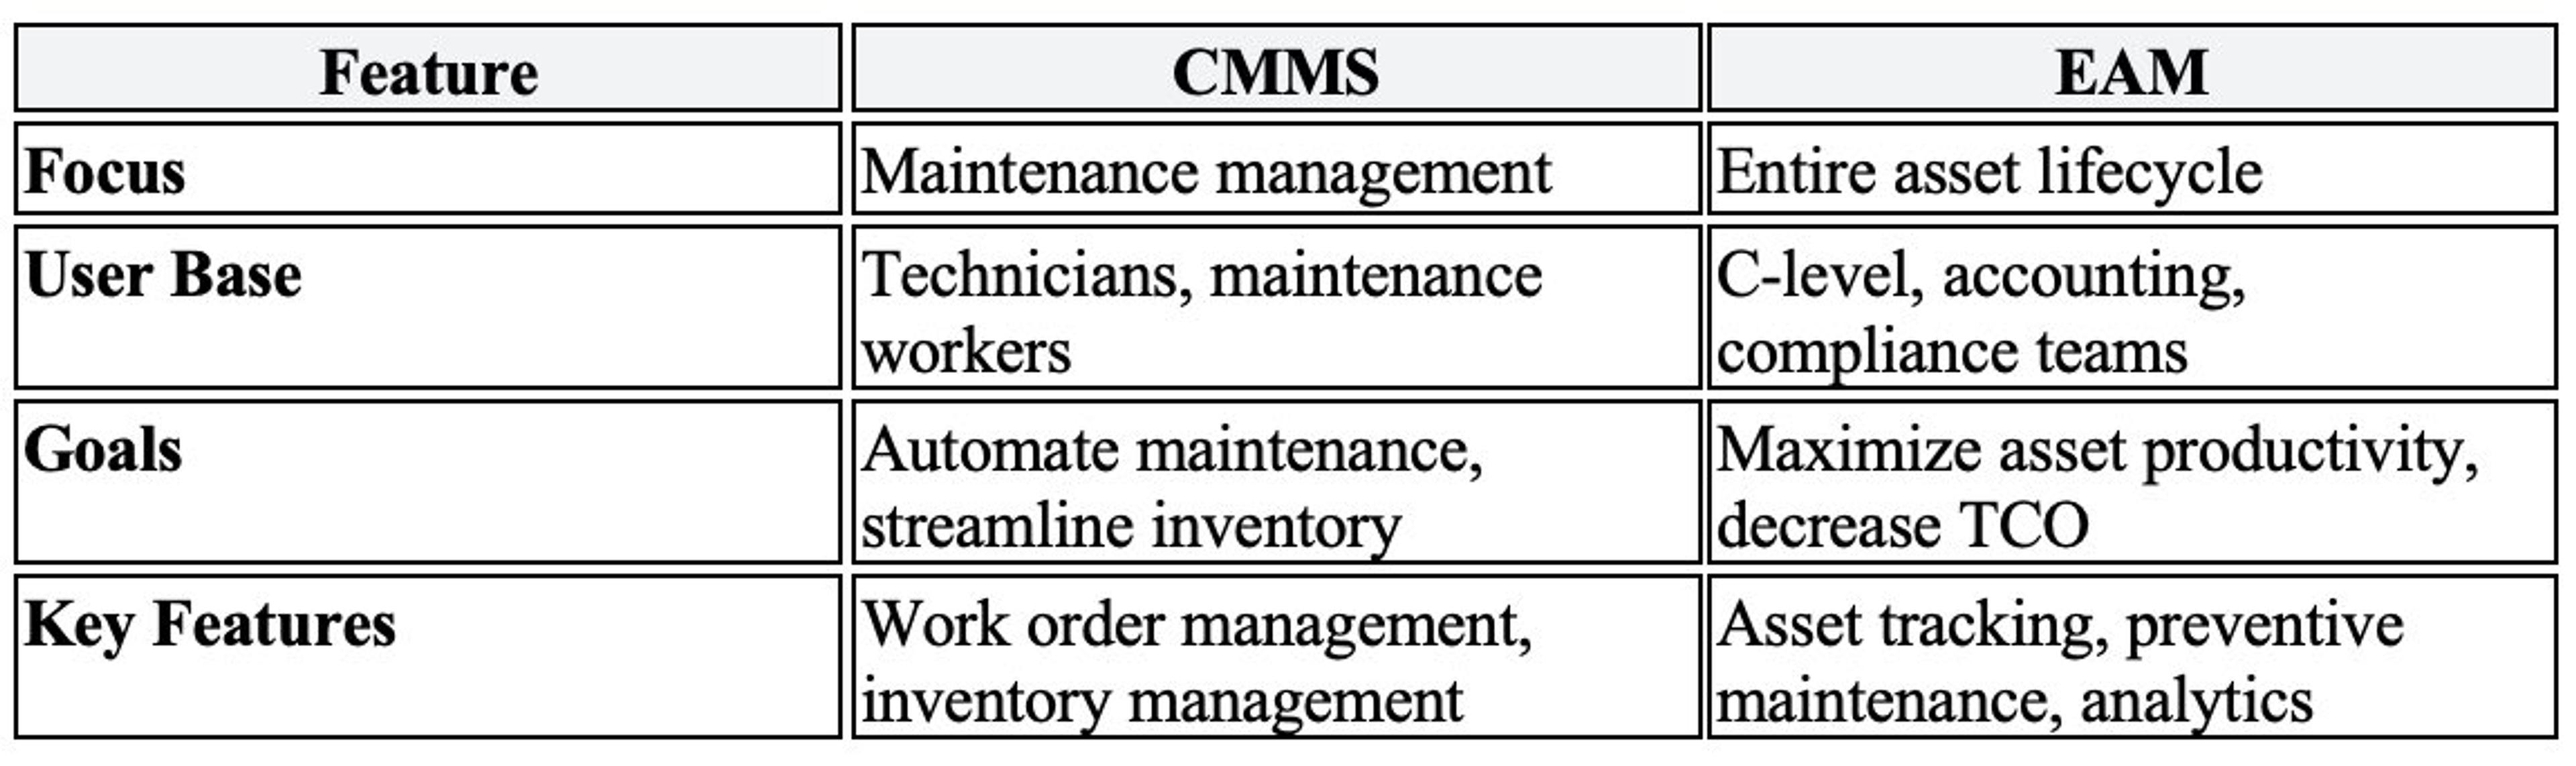 Comparison of CMMS vs. EAM